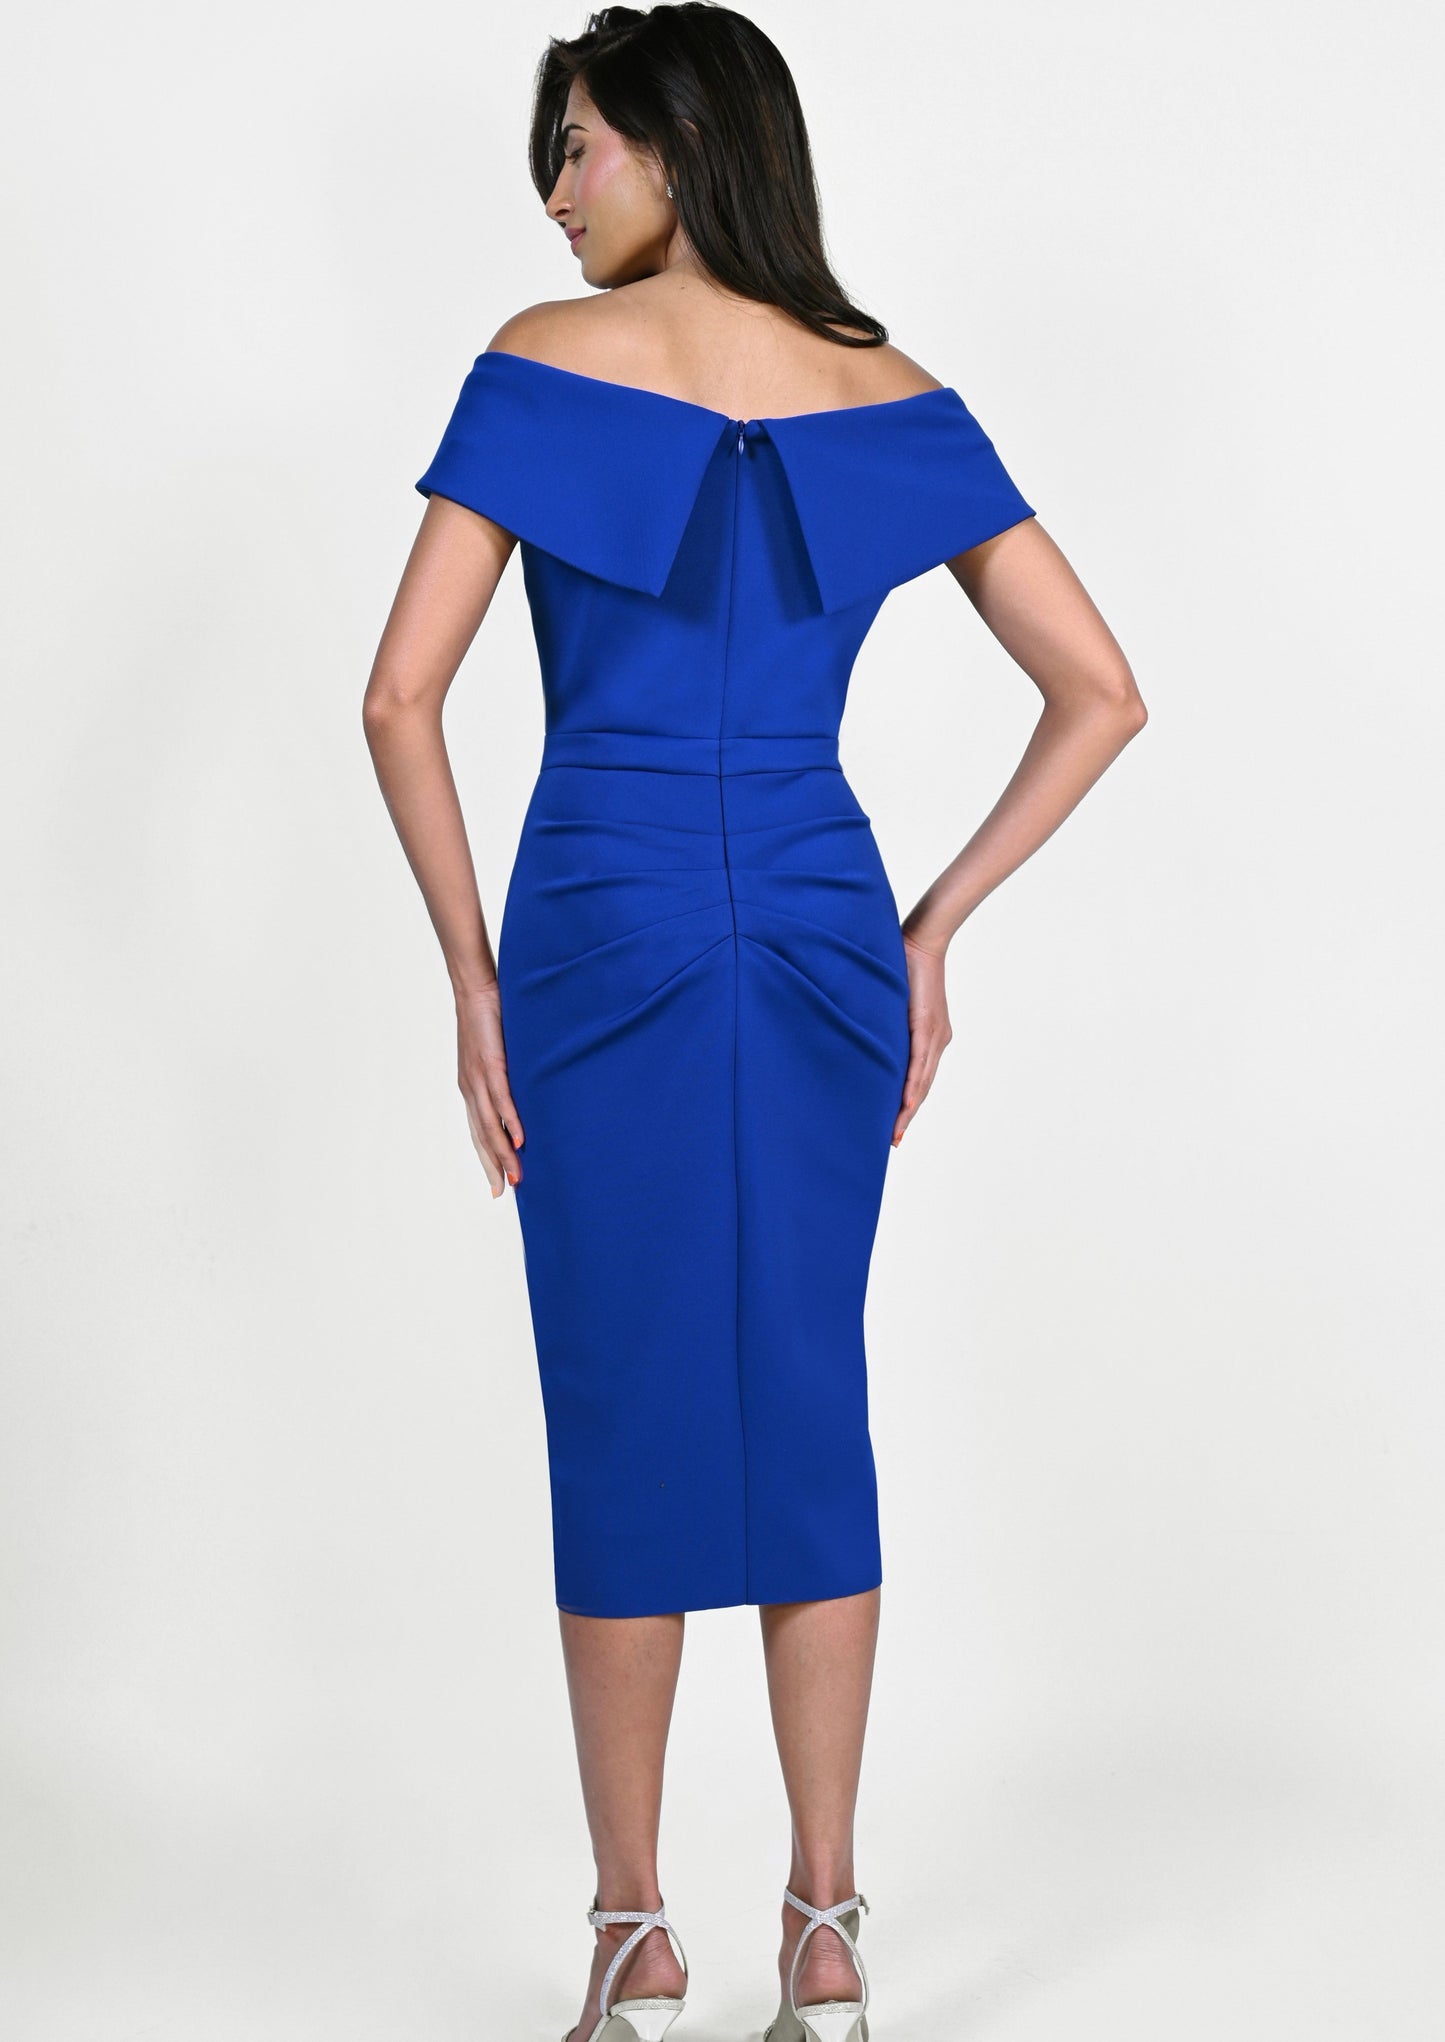 Frank Lyman 229163 Cobalt Blue Dress